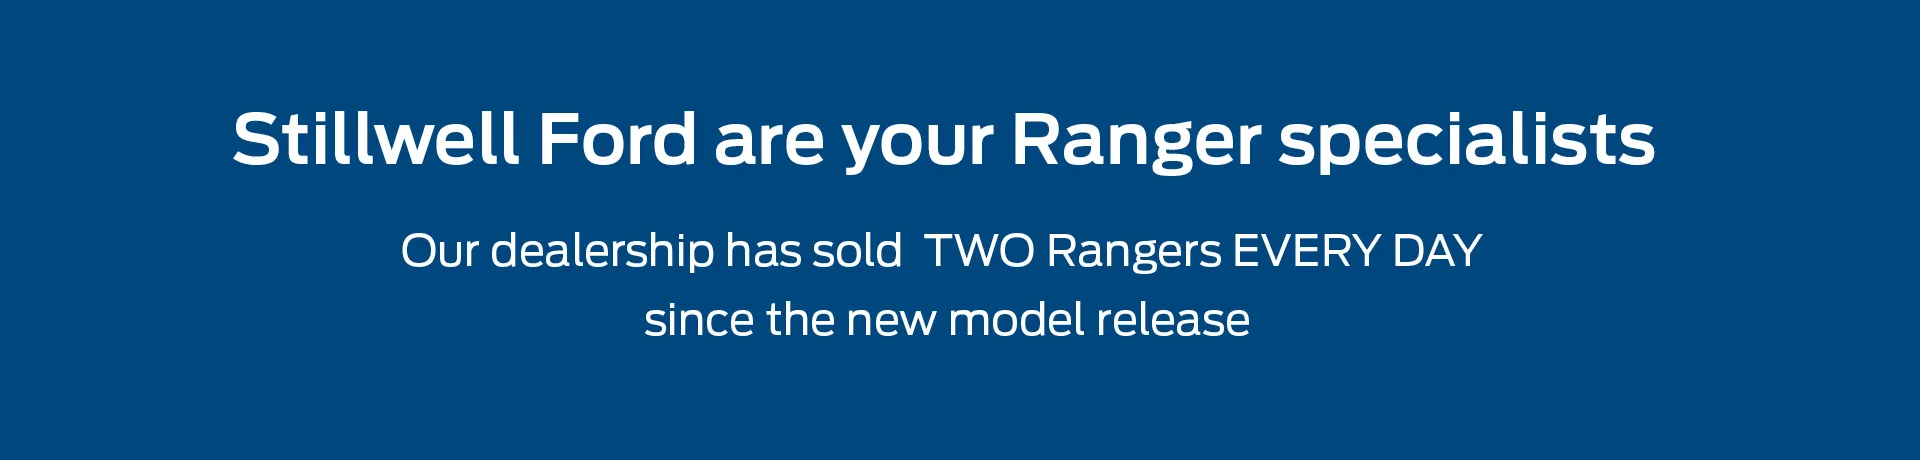 Ranger banners_5